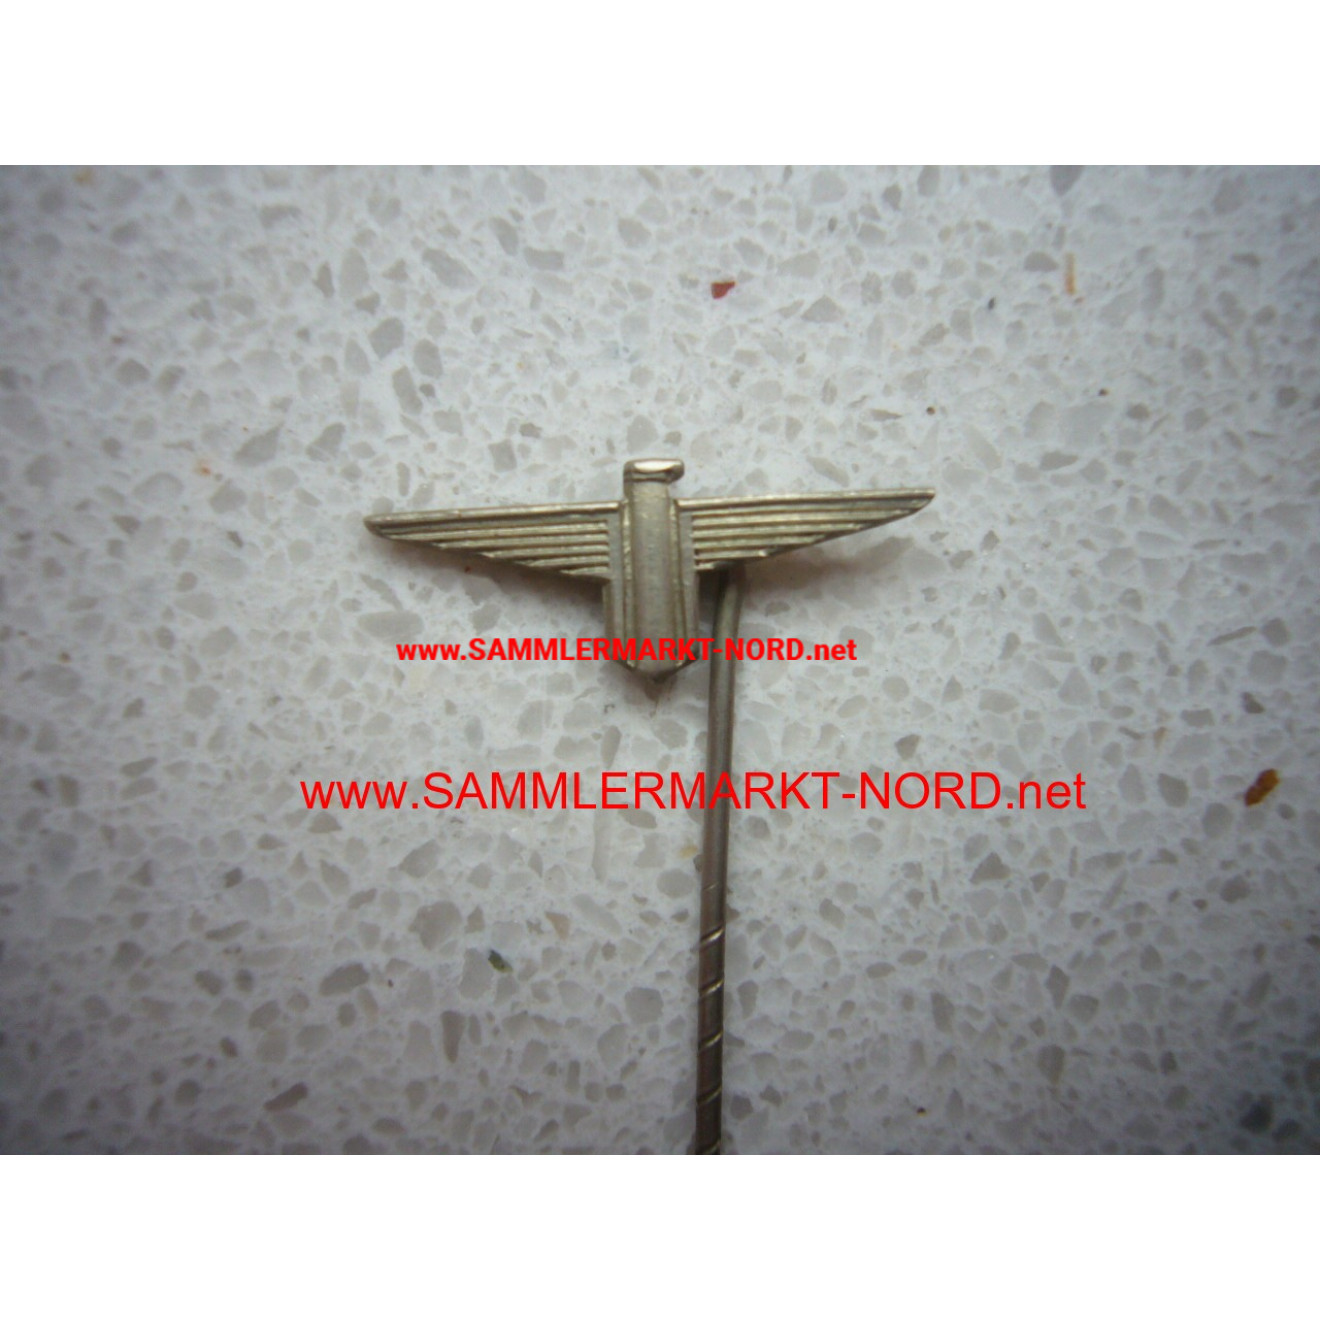 Adlerwerke AG (automobile) - Company needle